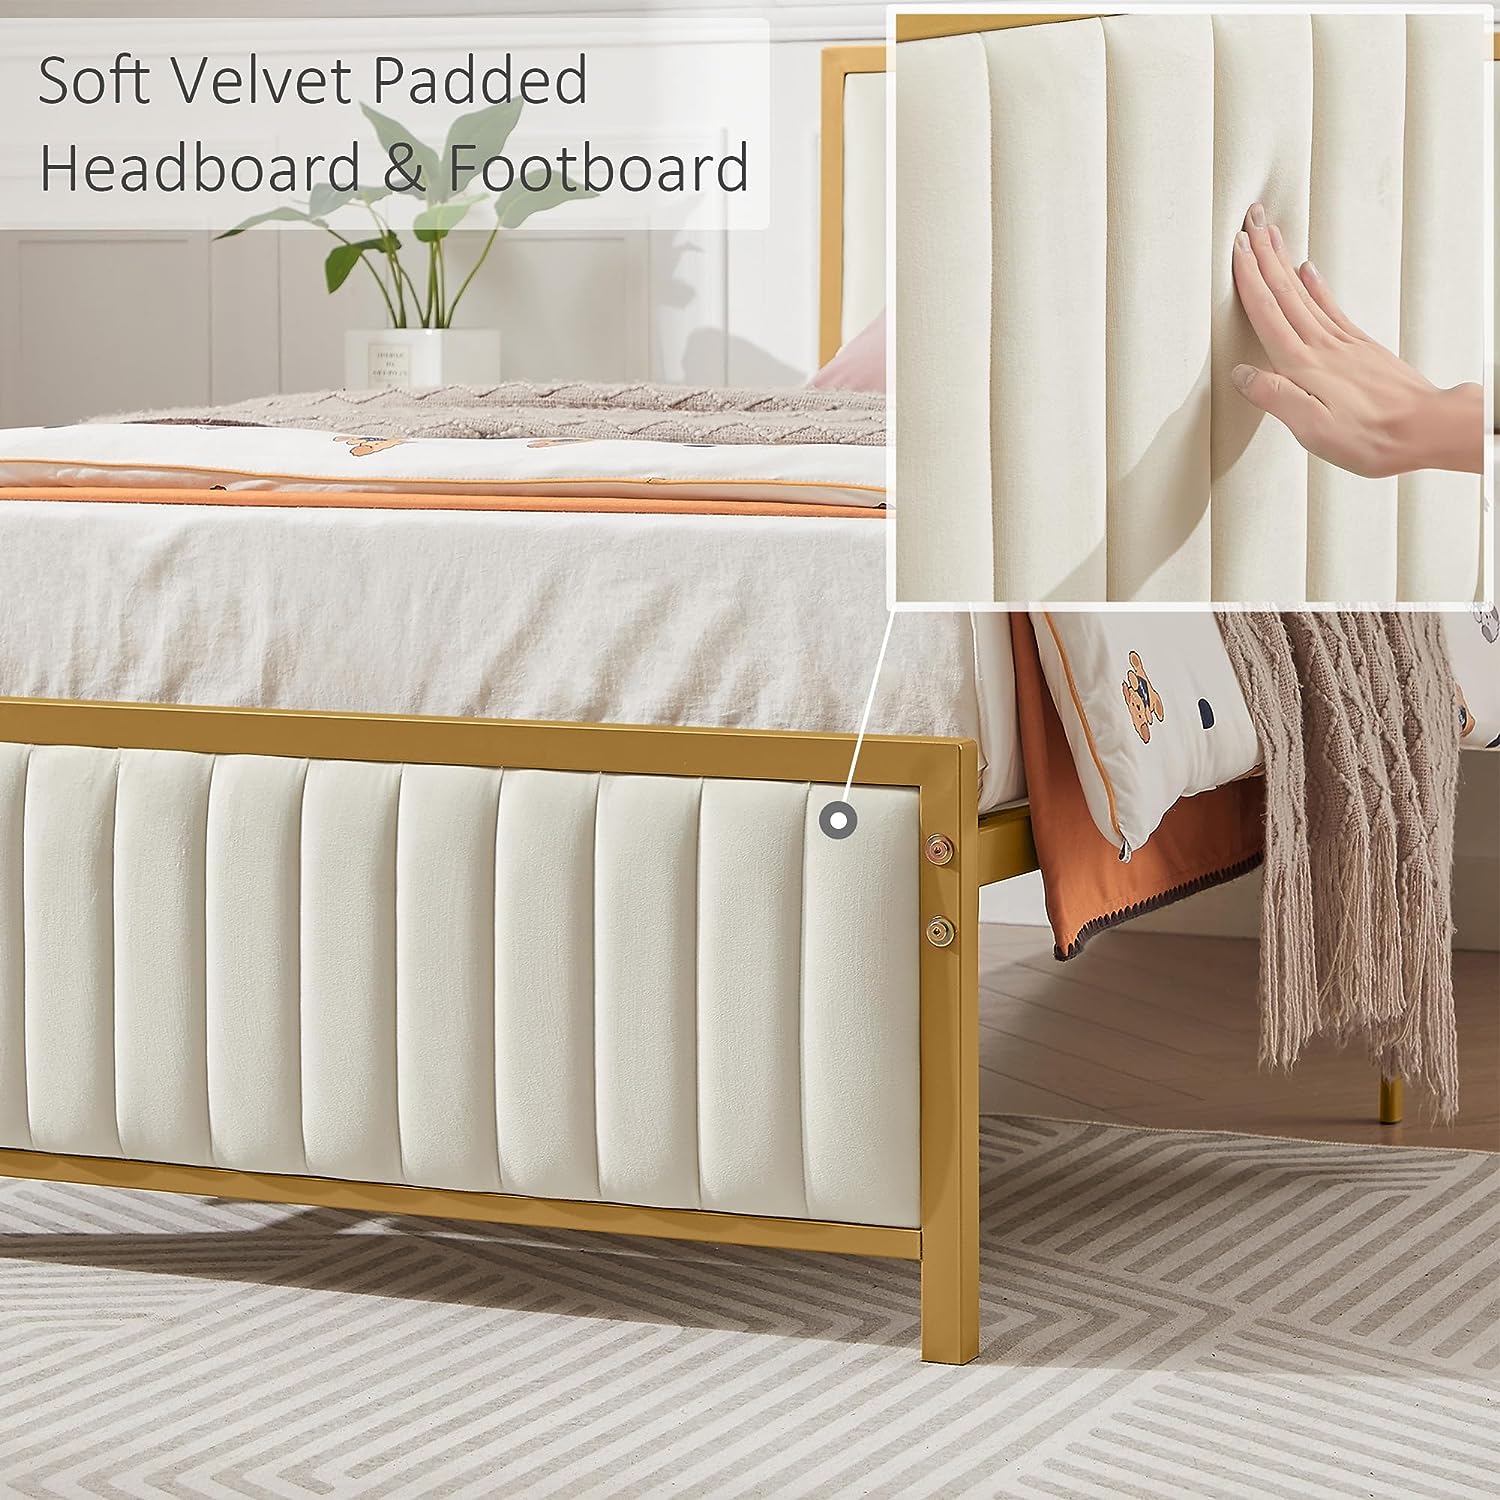 VECELO Bed Frame with Upholstered Tufted Headboard & Footboard, Heavy Duty Steel Slats Platform,Gold